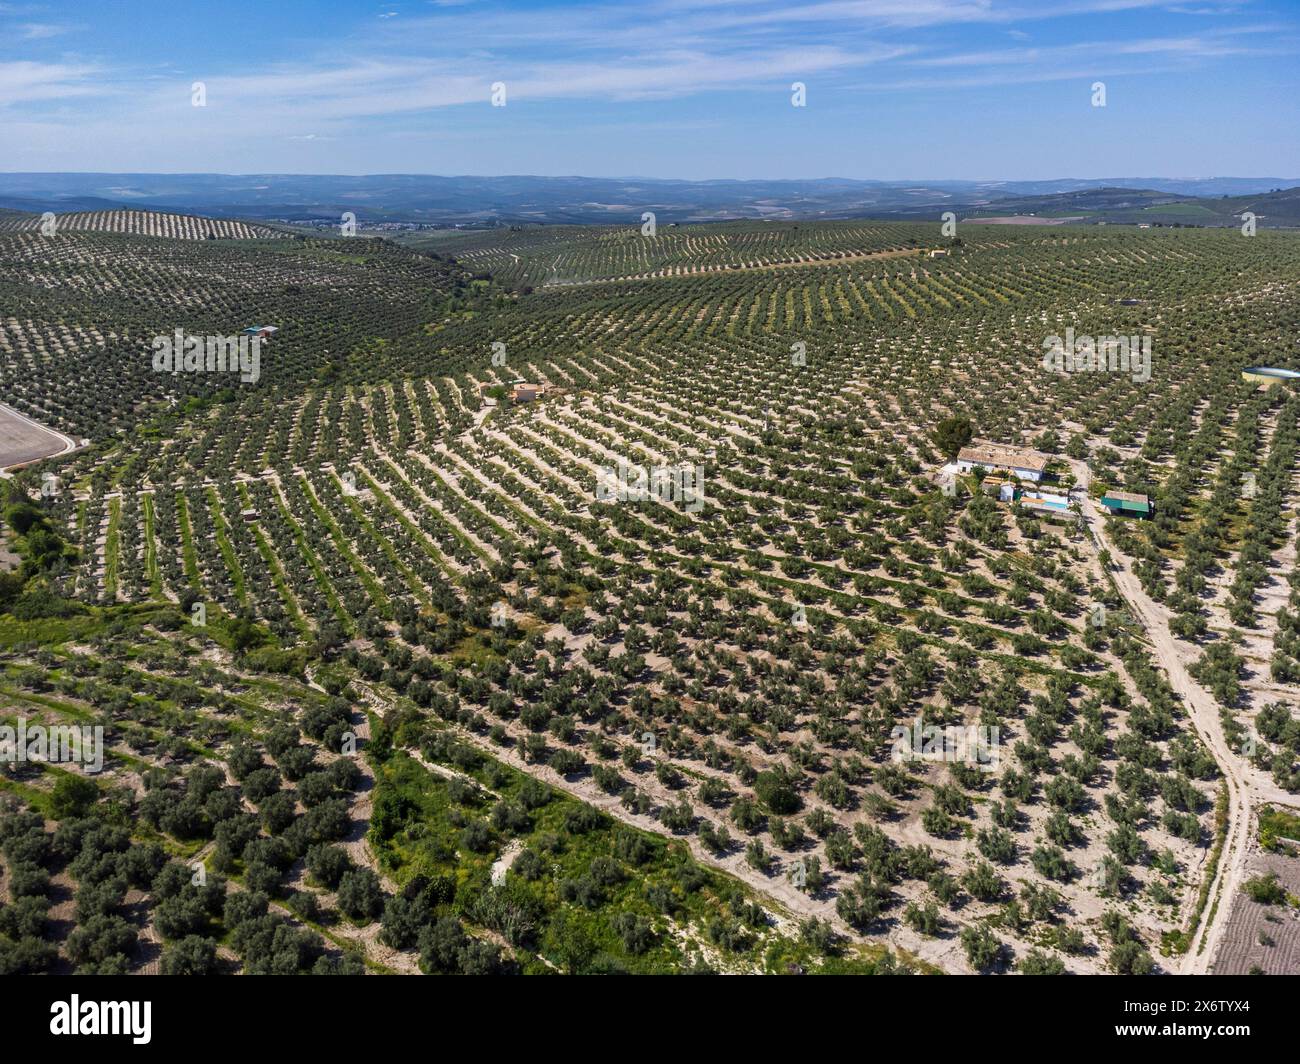 sea of olive trees , Quesada, Natural Park of the Sierras de Cazorla, Segura and Las Villas, Jaén province, Andalusia, Spain. Stock Photo